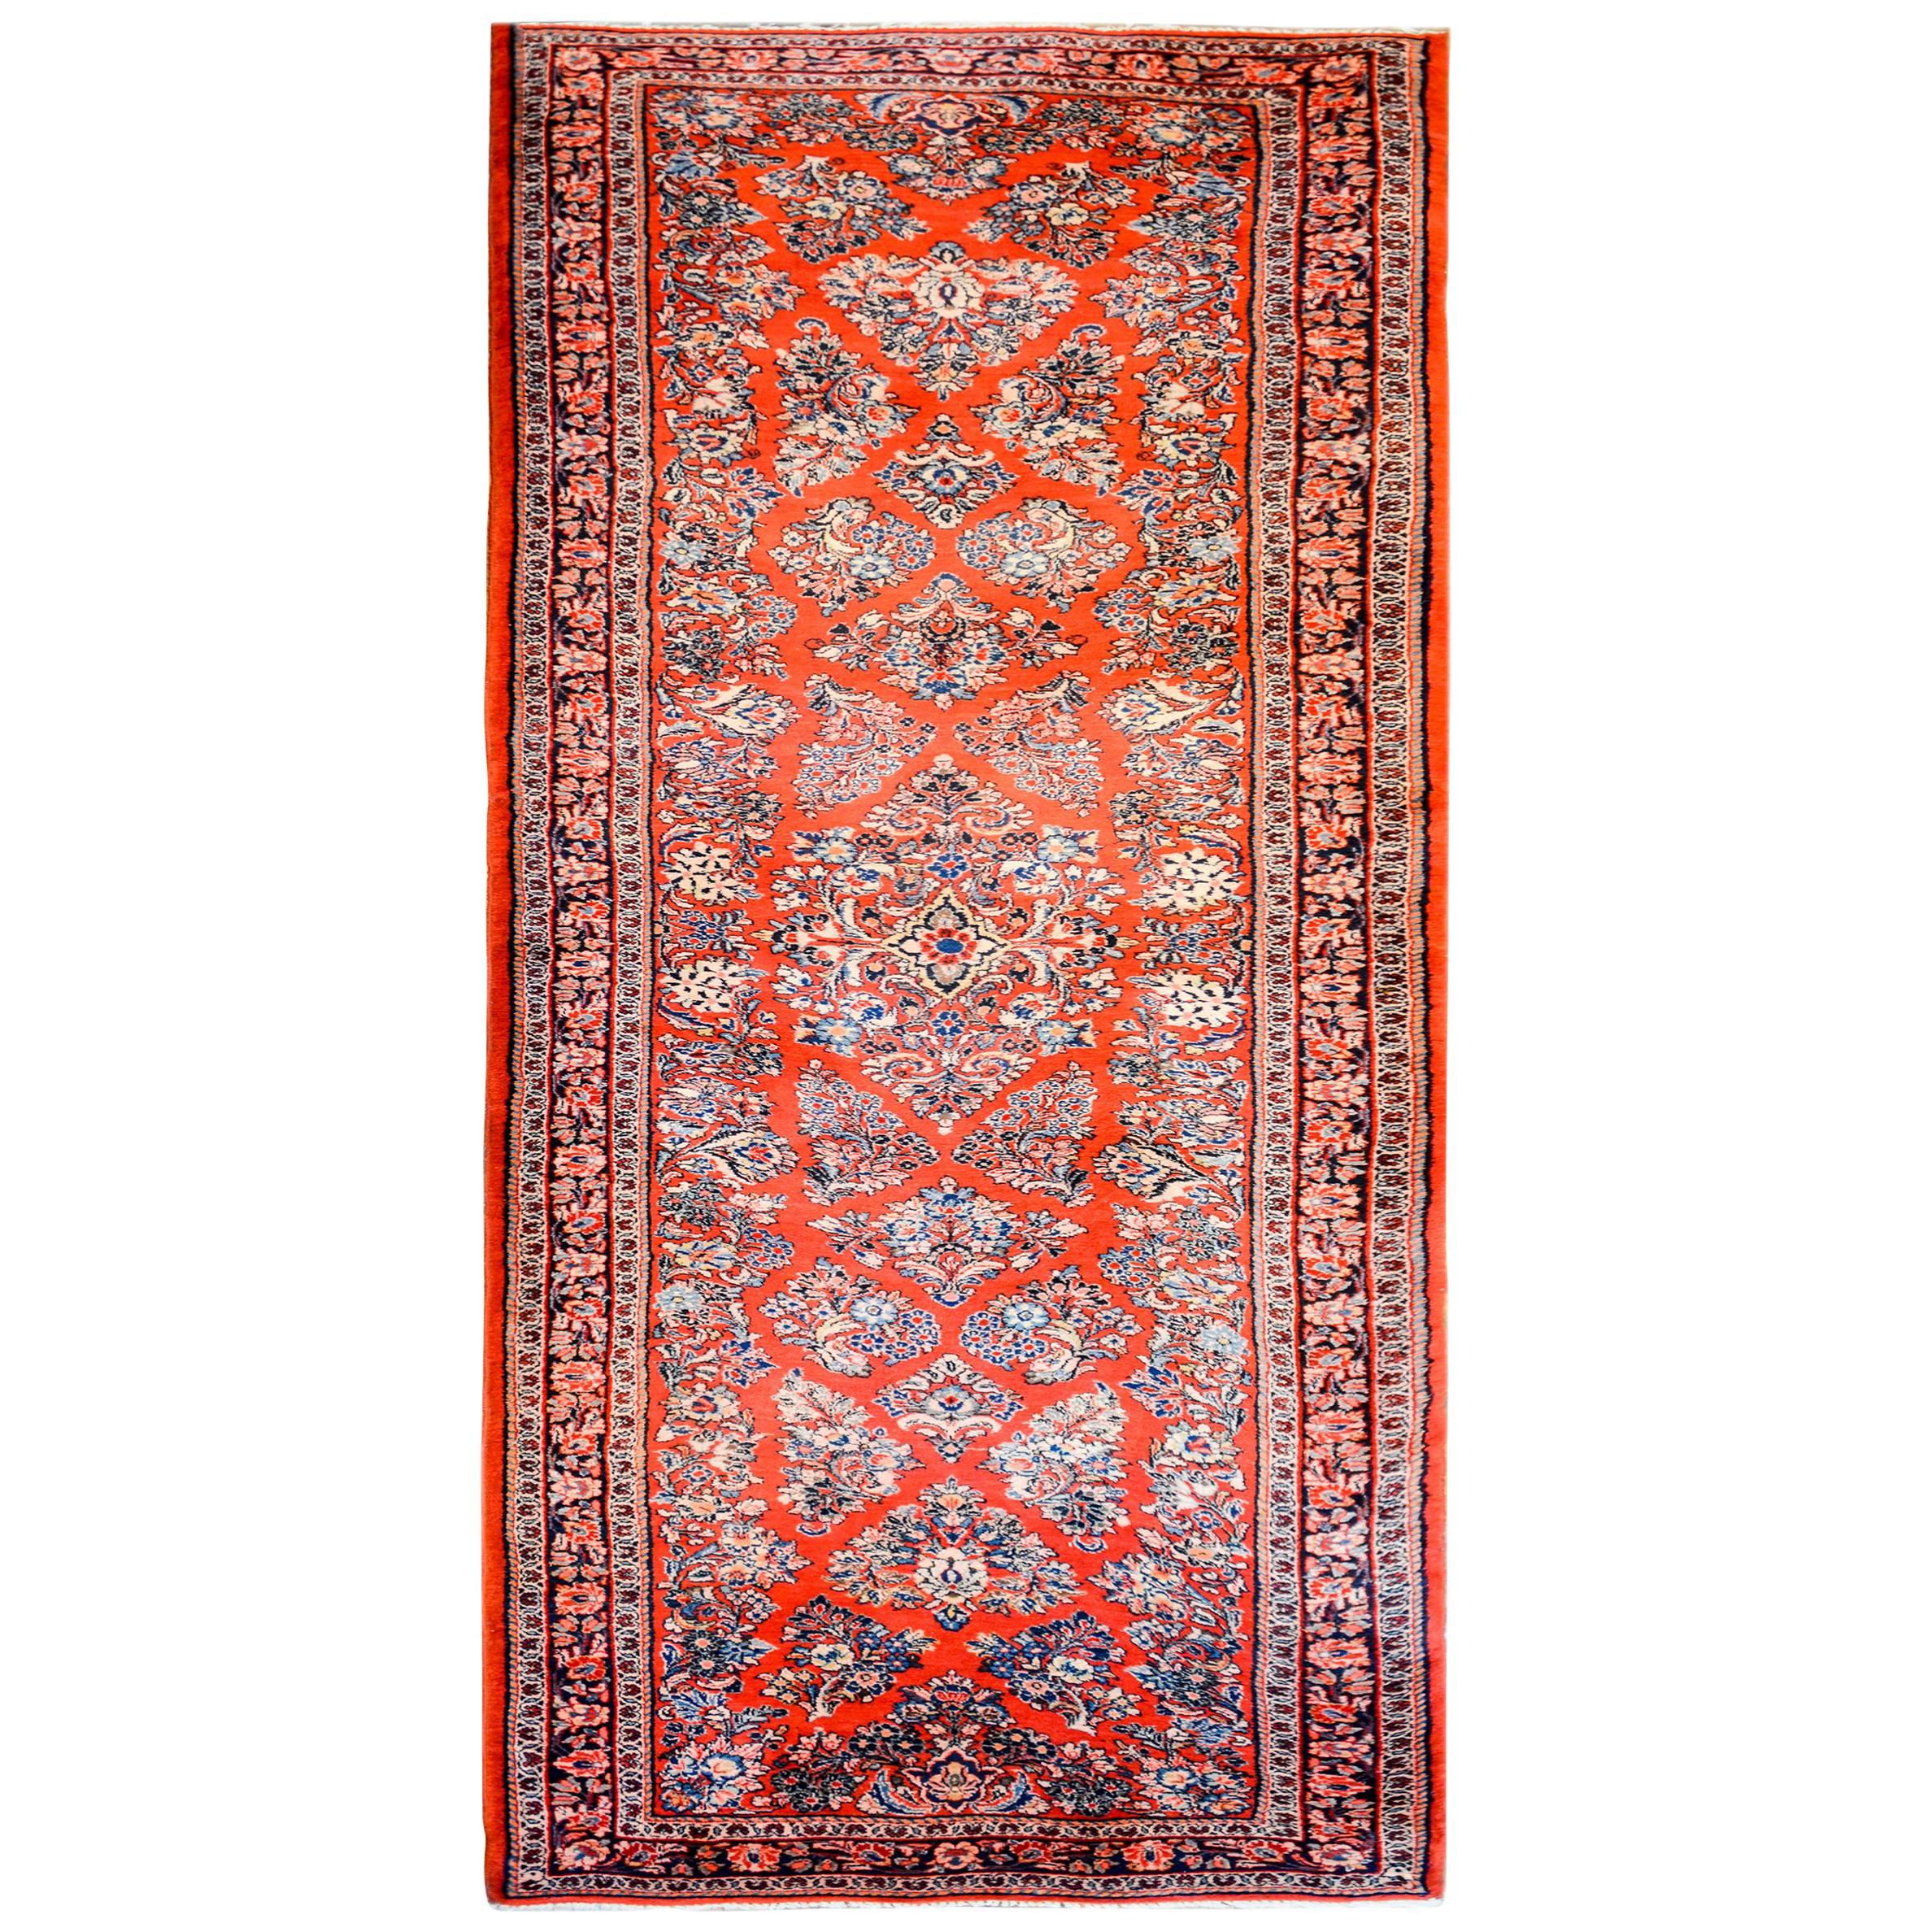 Wonderful Early 20th Century Persian Sarouk Rug